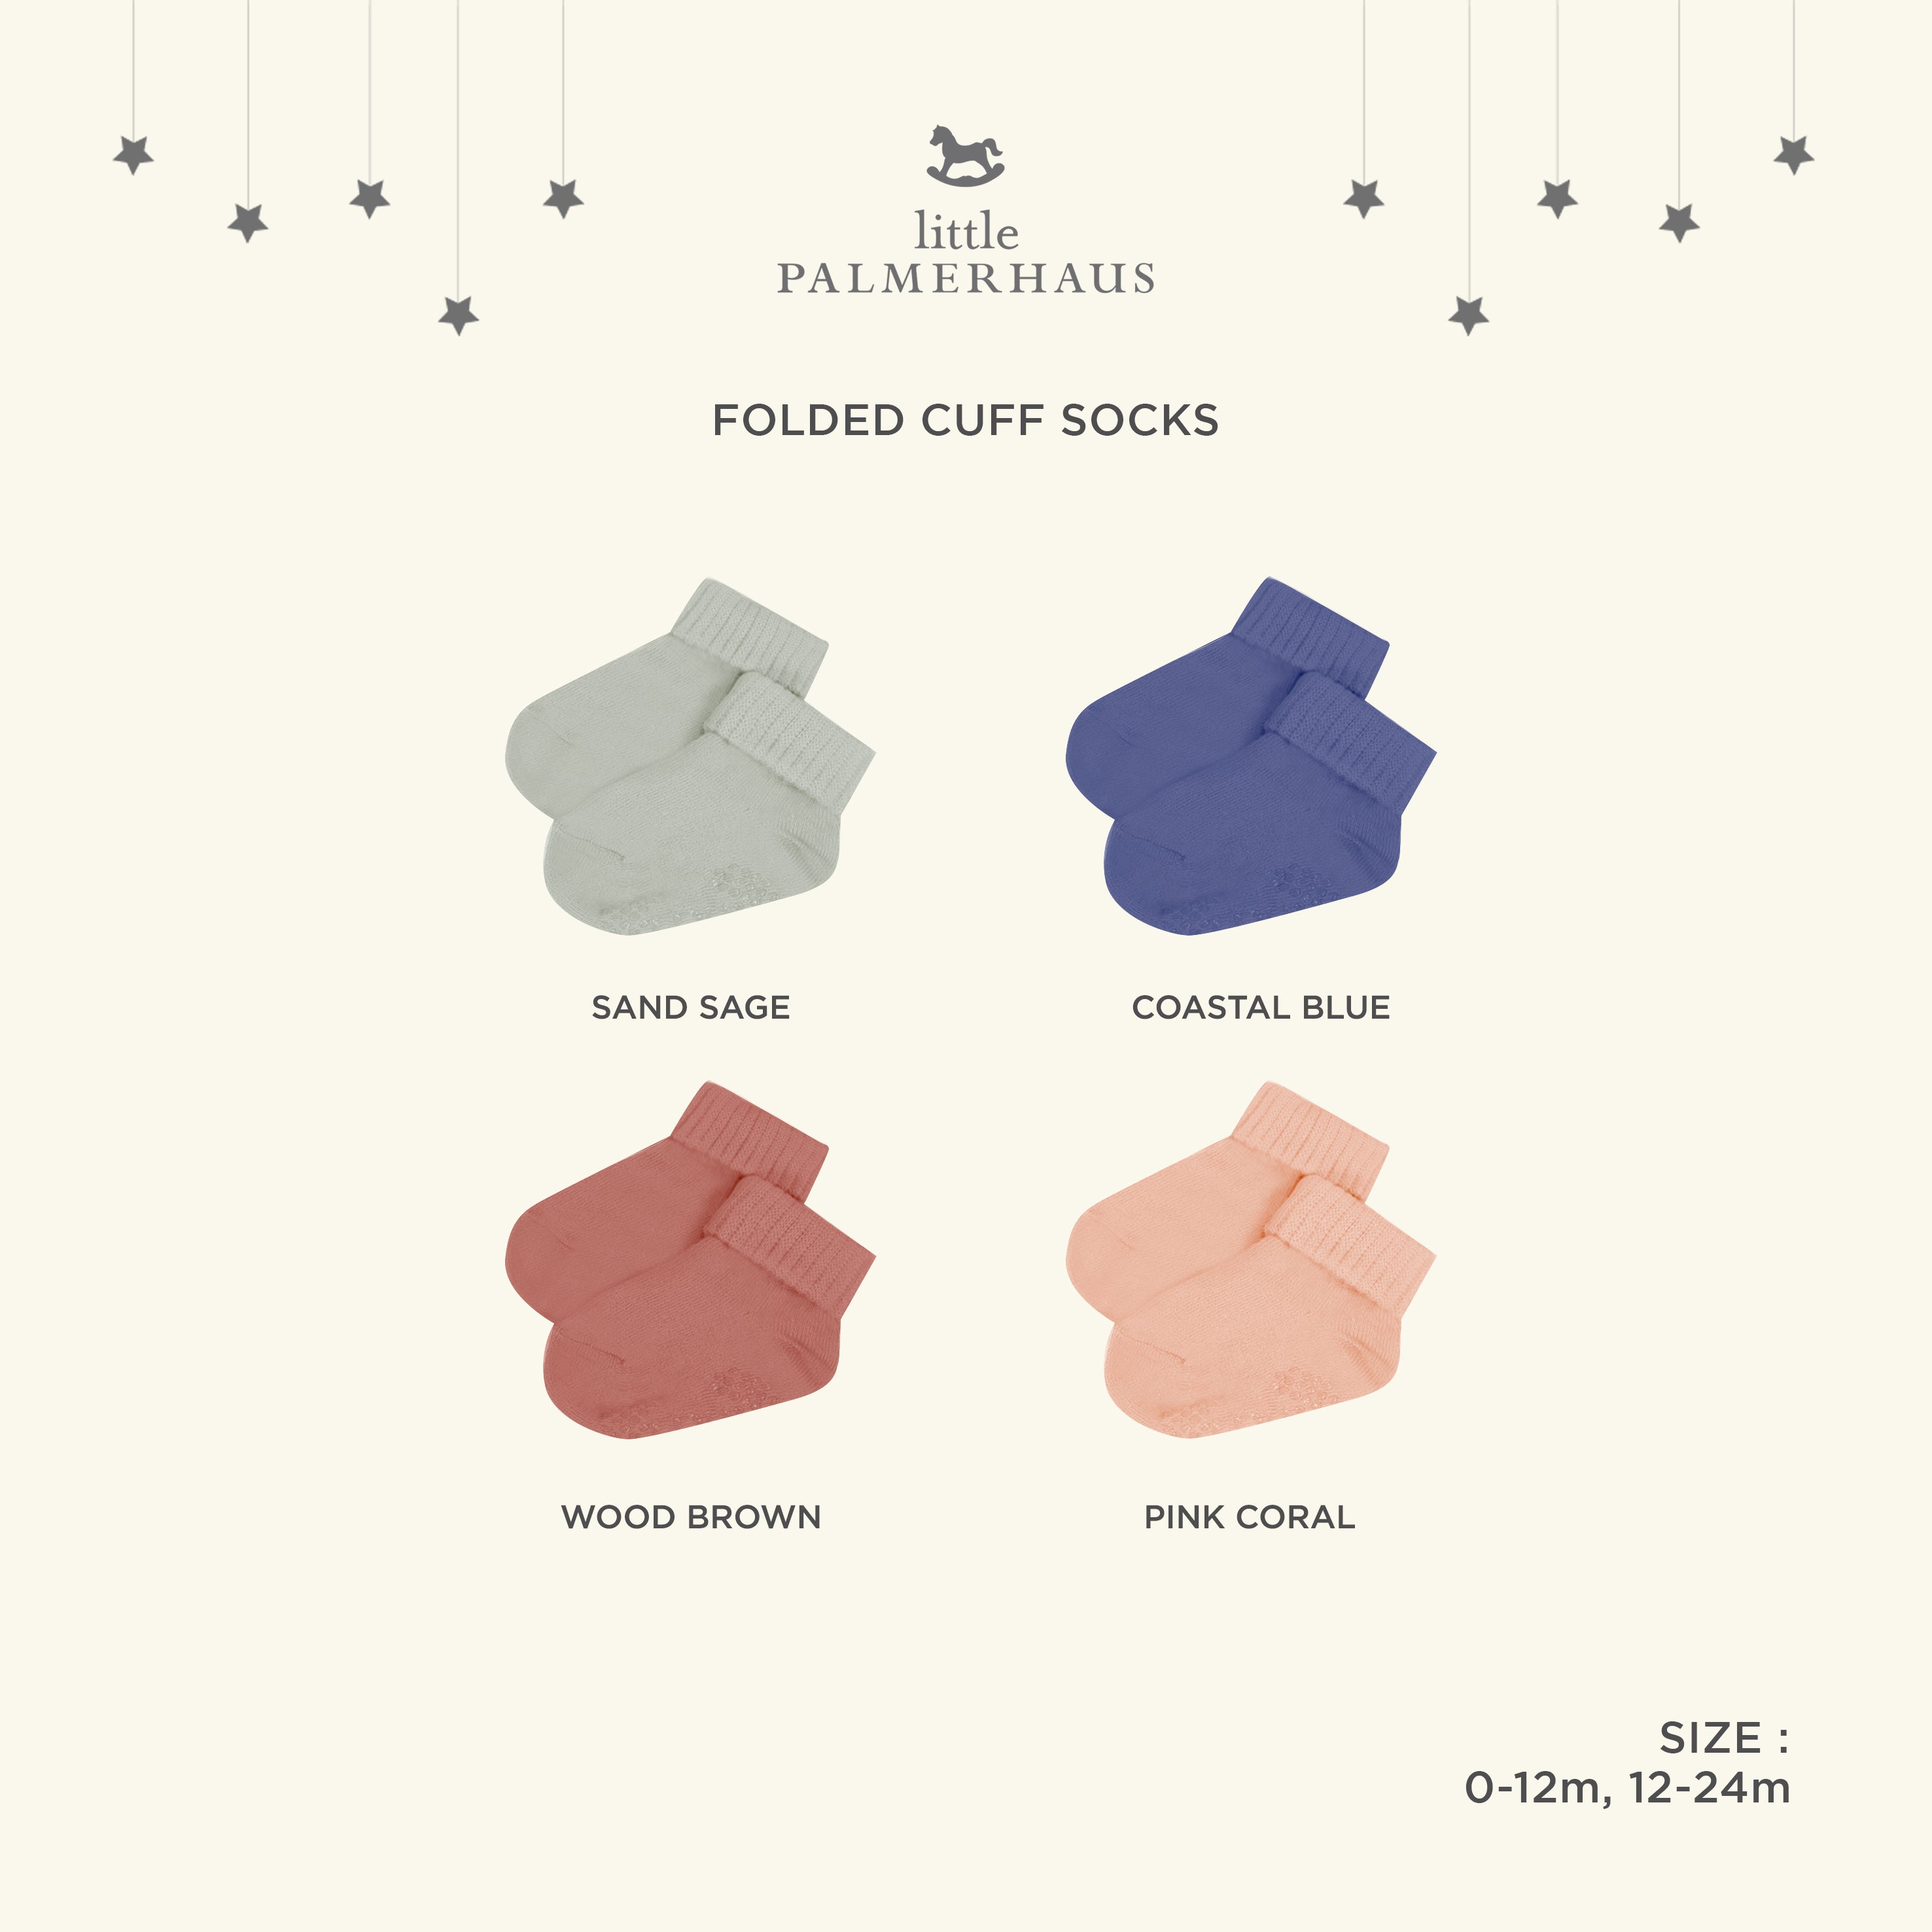 Folded Cuff Socks 5.0